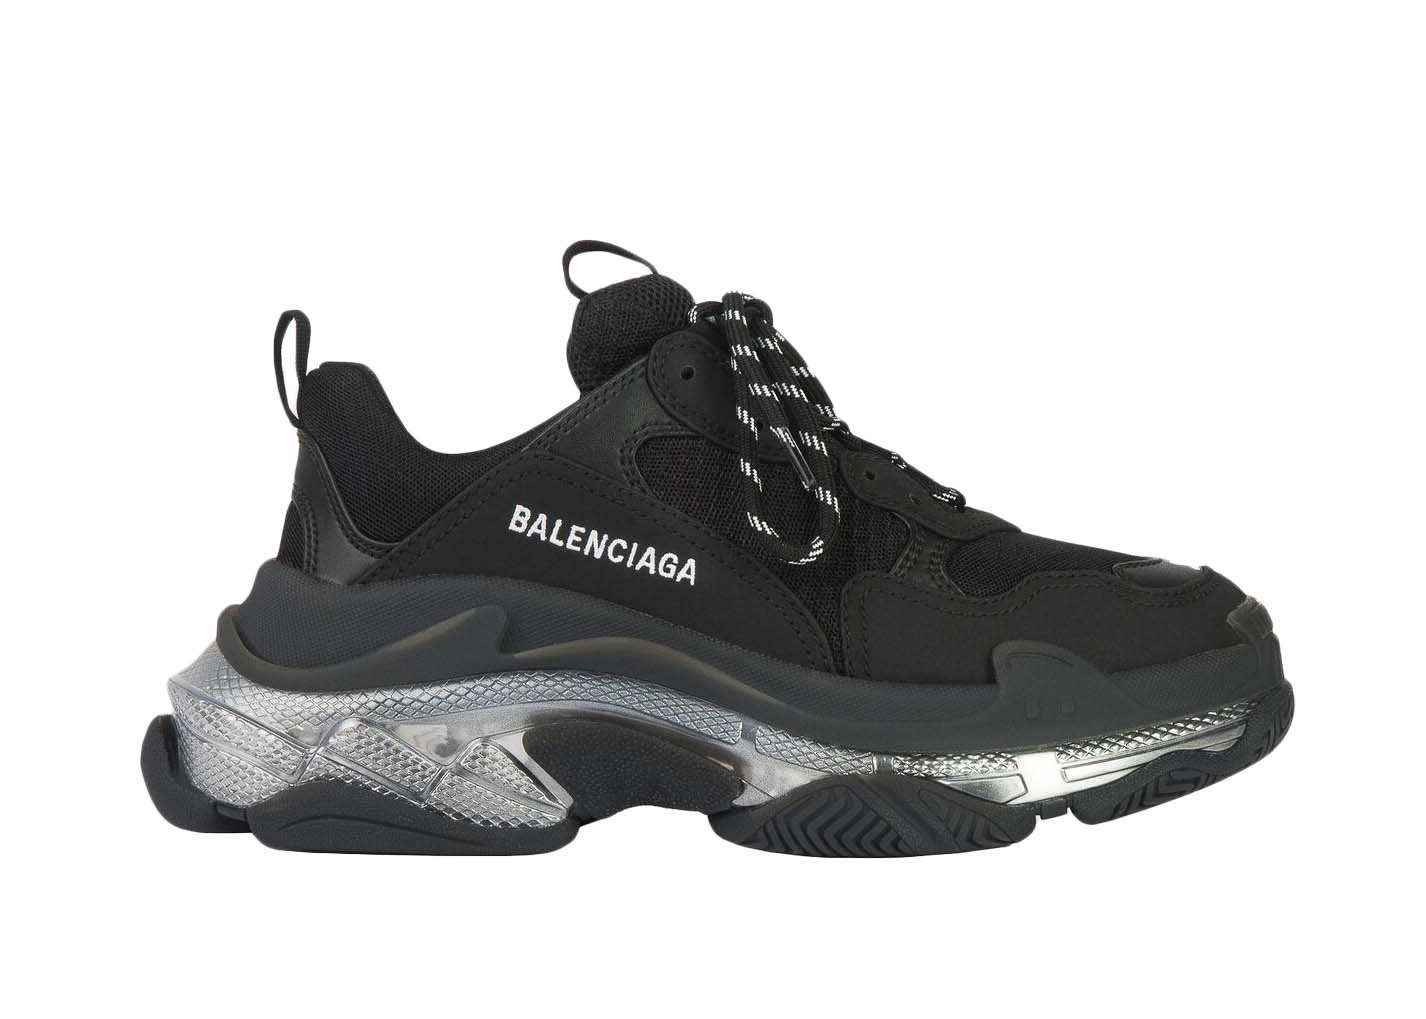 BALENCIAGA Sneakers Men  Triple S sneakers Black  BALENCIAGA 533882  W09OM1000  Leam Luxury Shopping Online